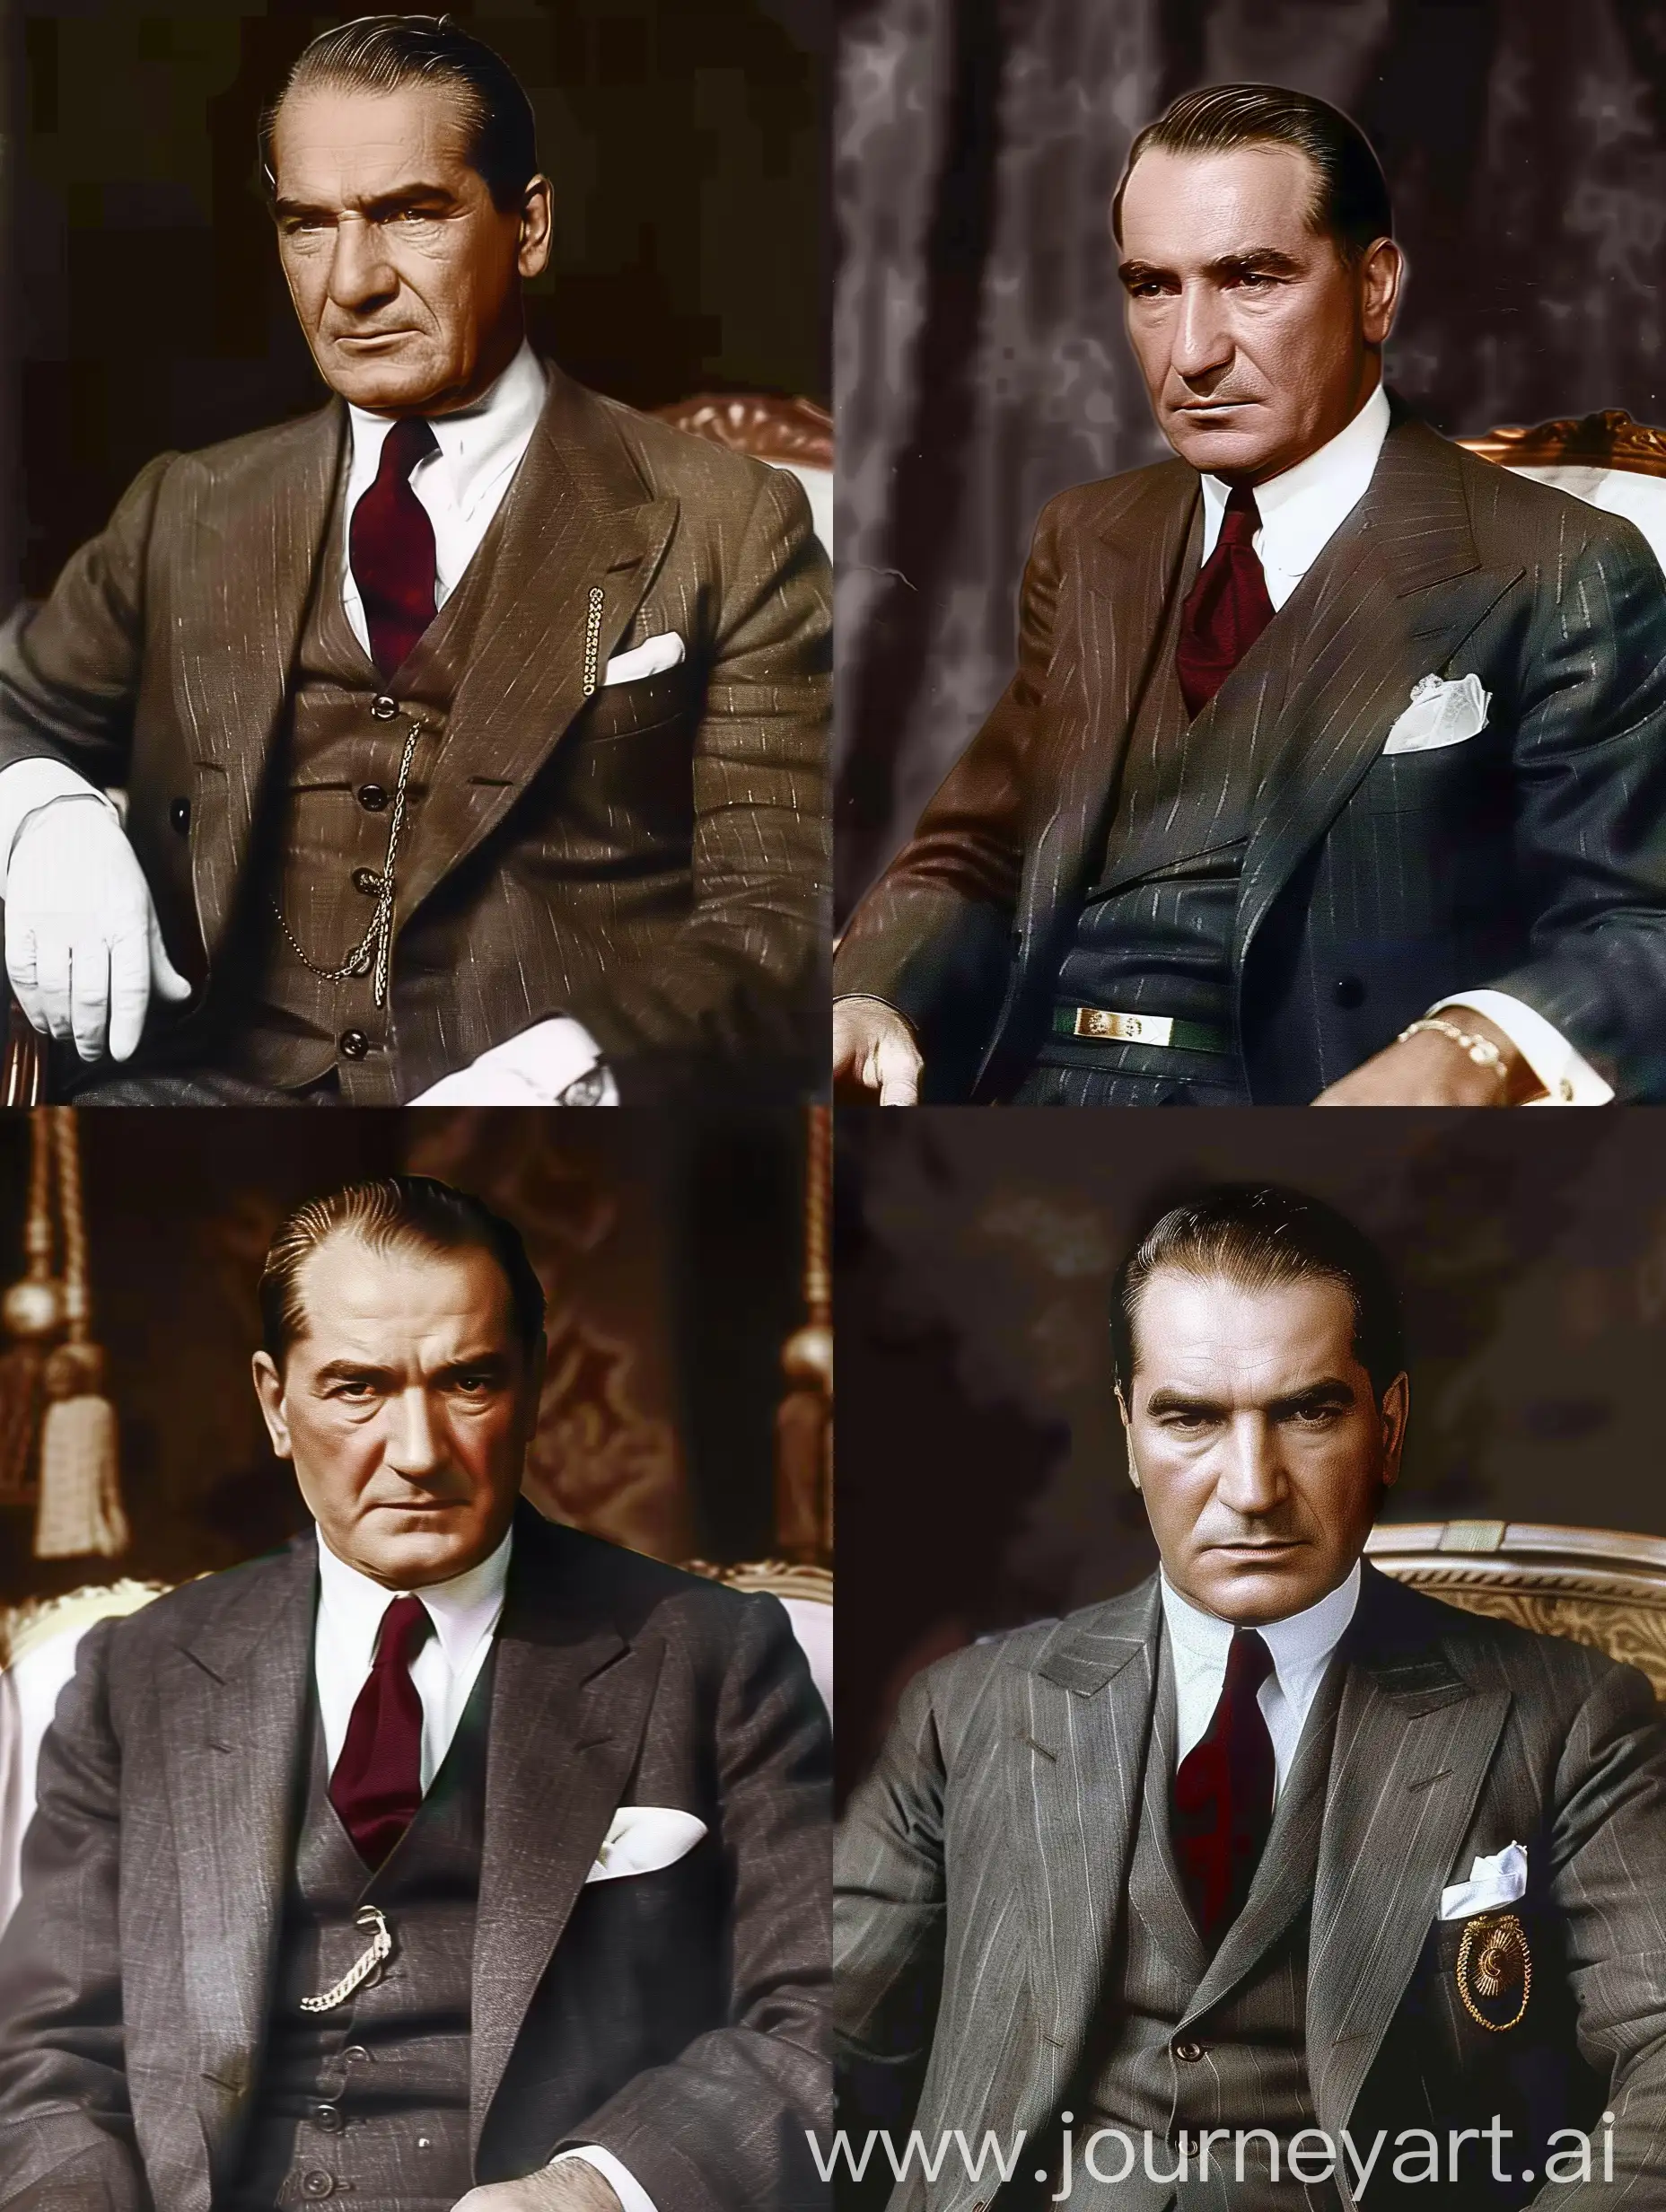 Mustafa-Kemal-Atatrk-Portrait-in-Charismatic-Colorized-Cinematic-Lighting